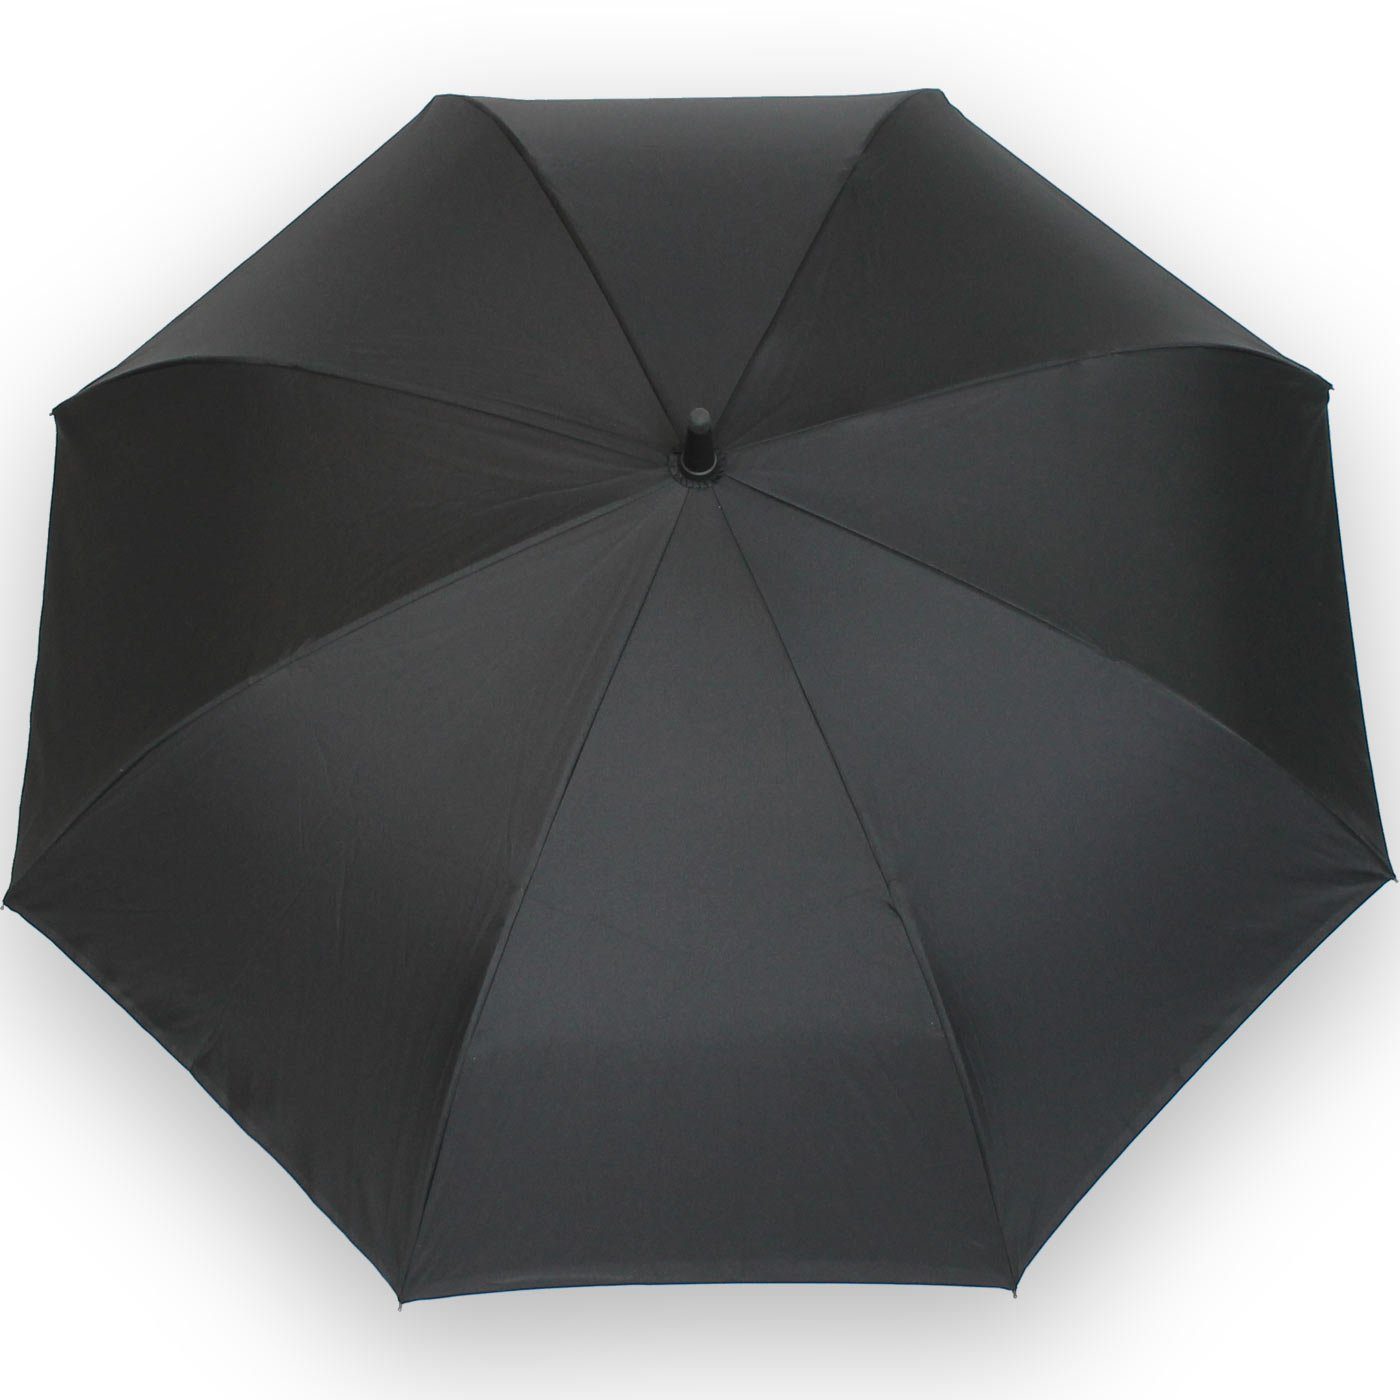 iX-brella Langregenschirm Reverse-Schirm - umgedreht umgedreht mit schwarz-neon-grün öffnen zu Automatik